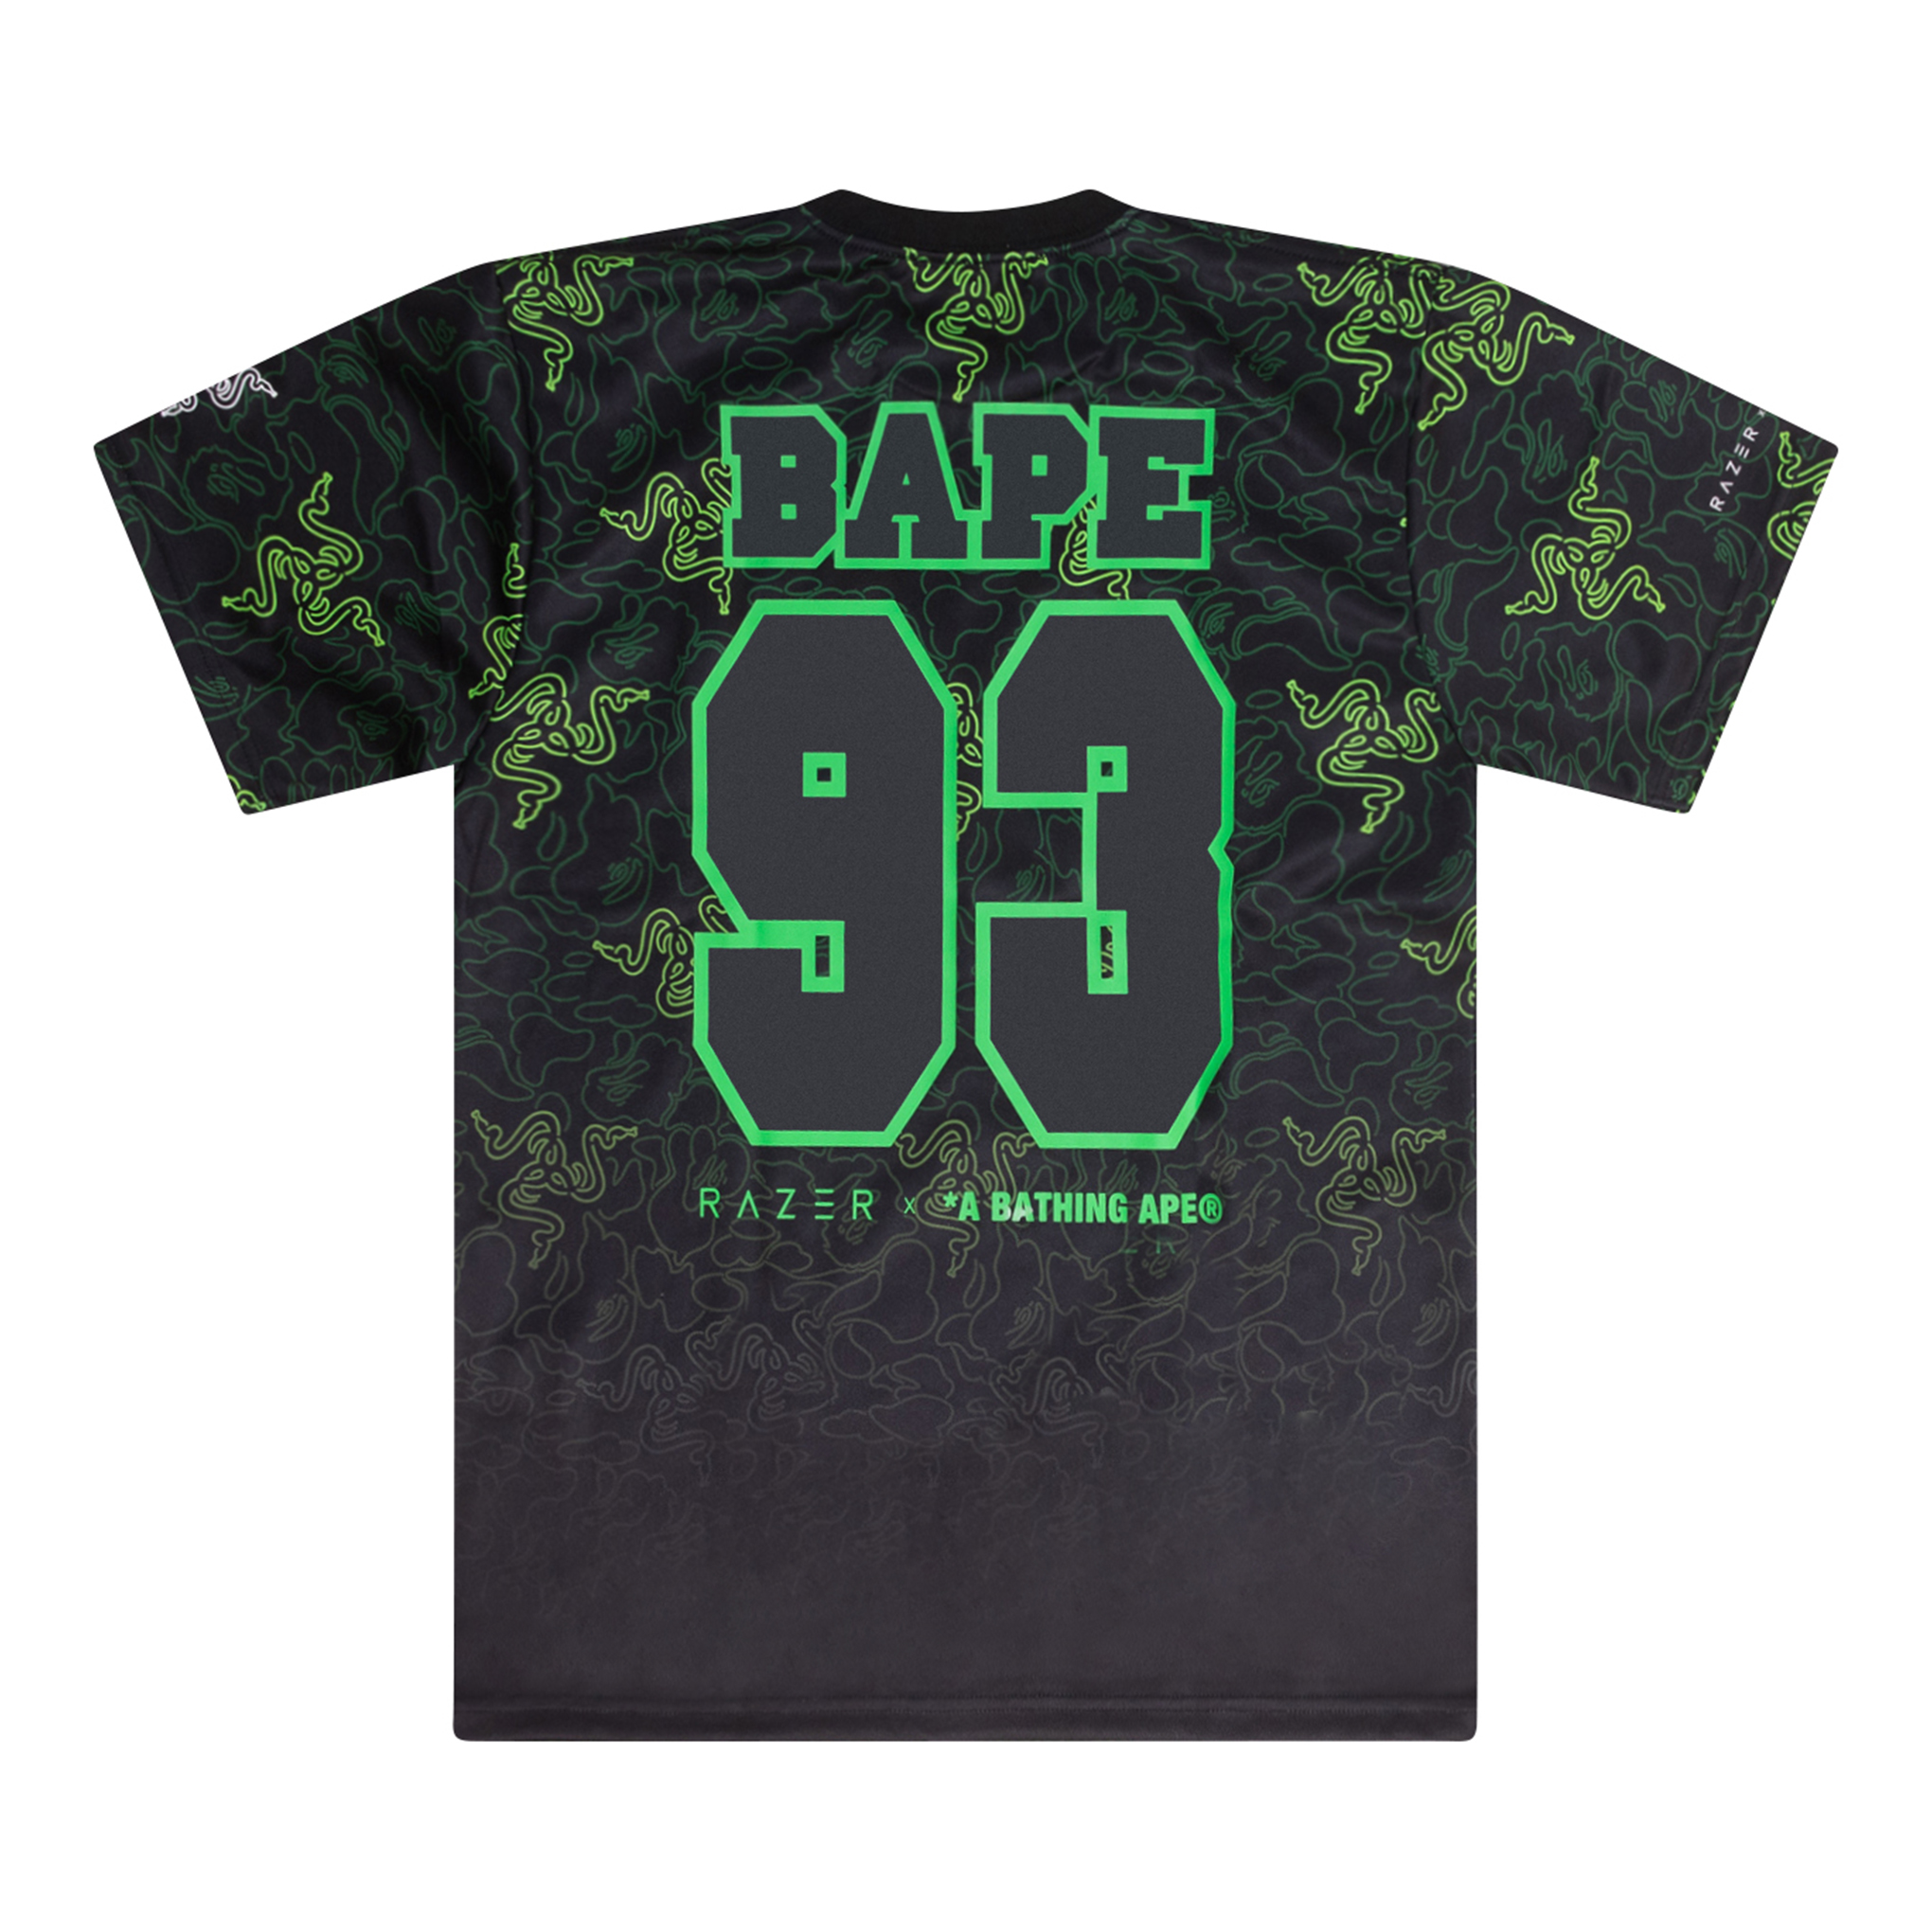 BAPE RAZER NEON CAMO TEAM T 恤 绿色